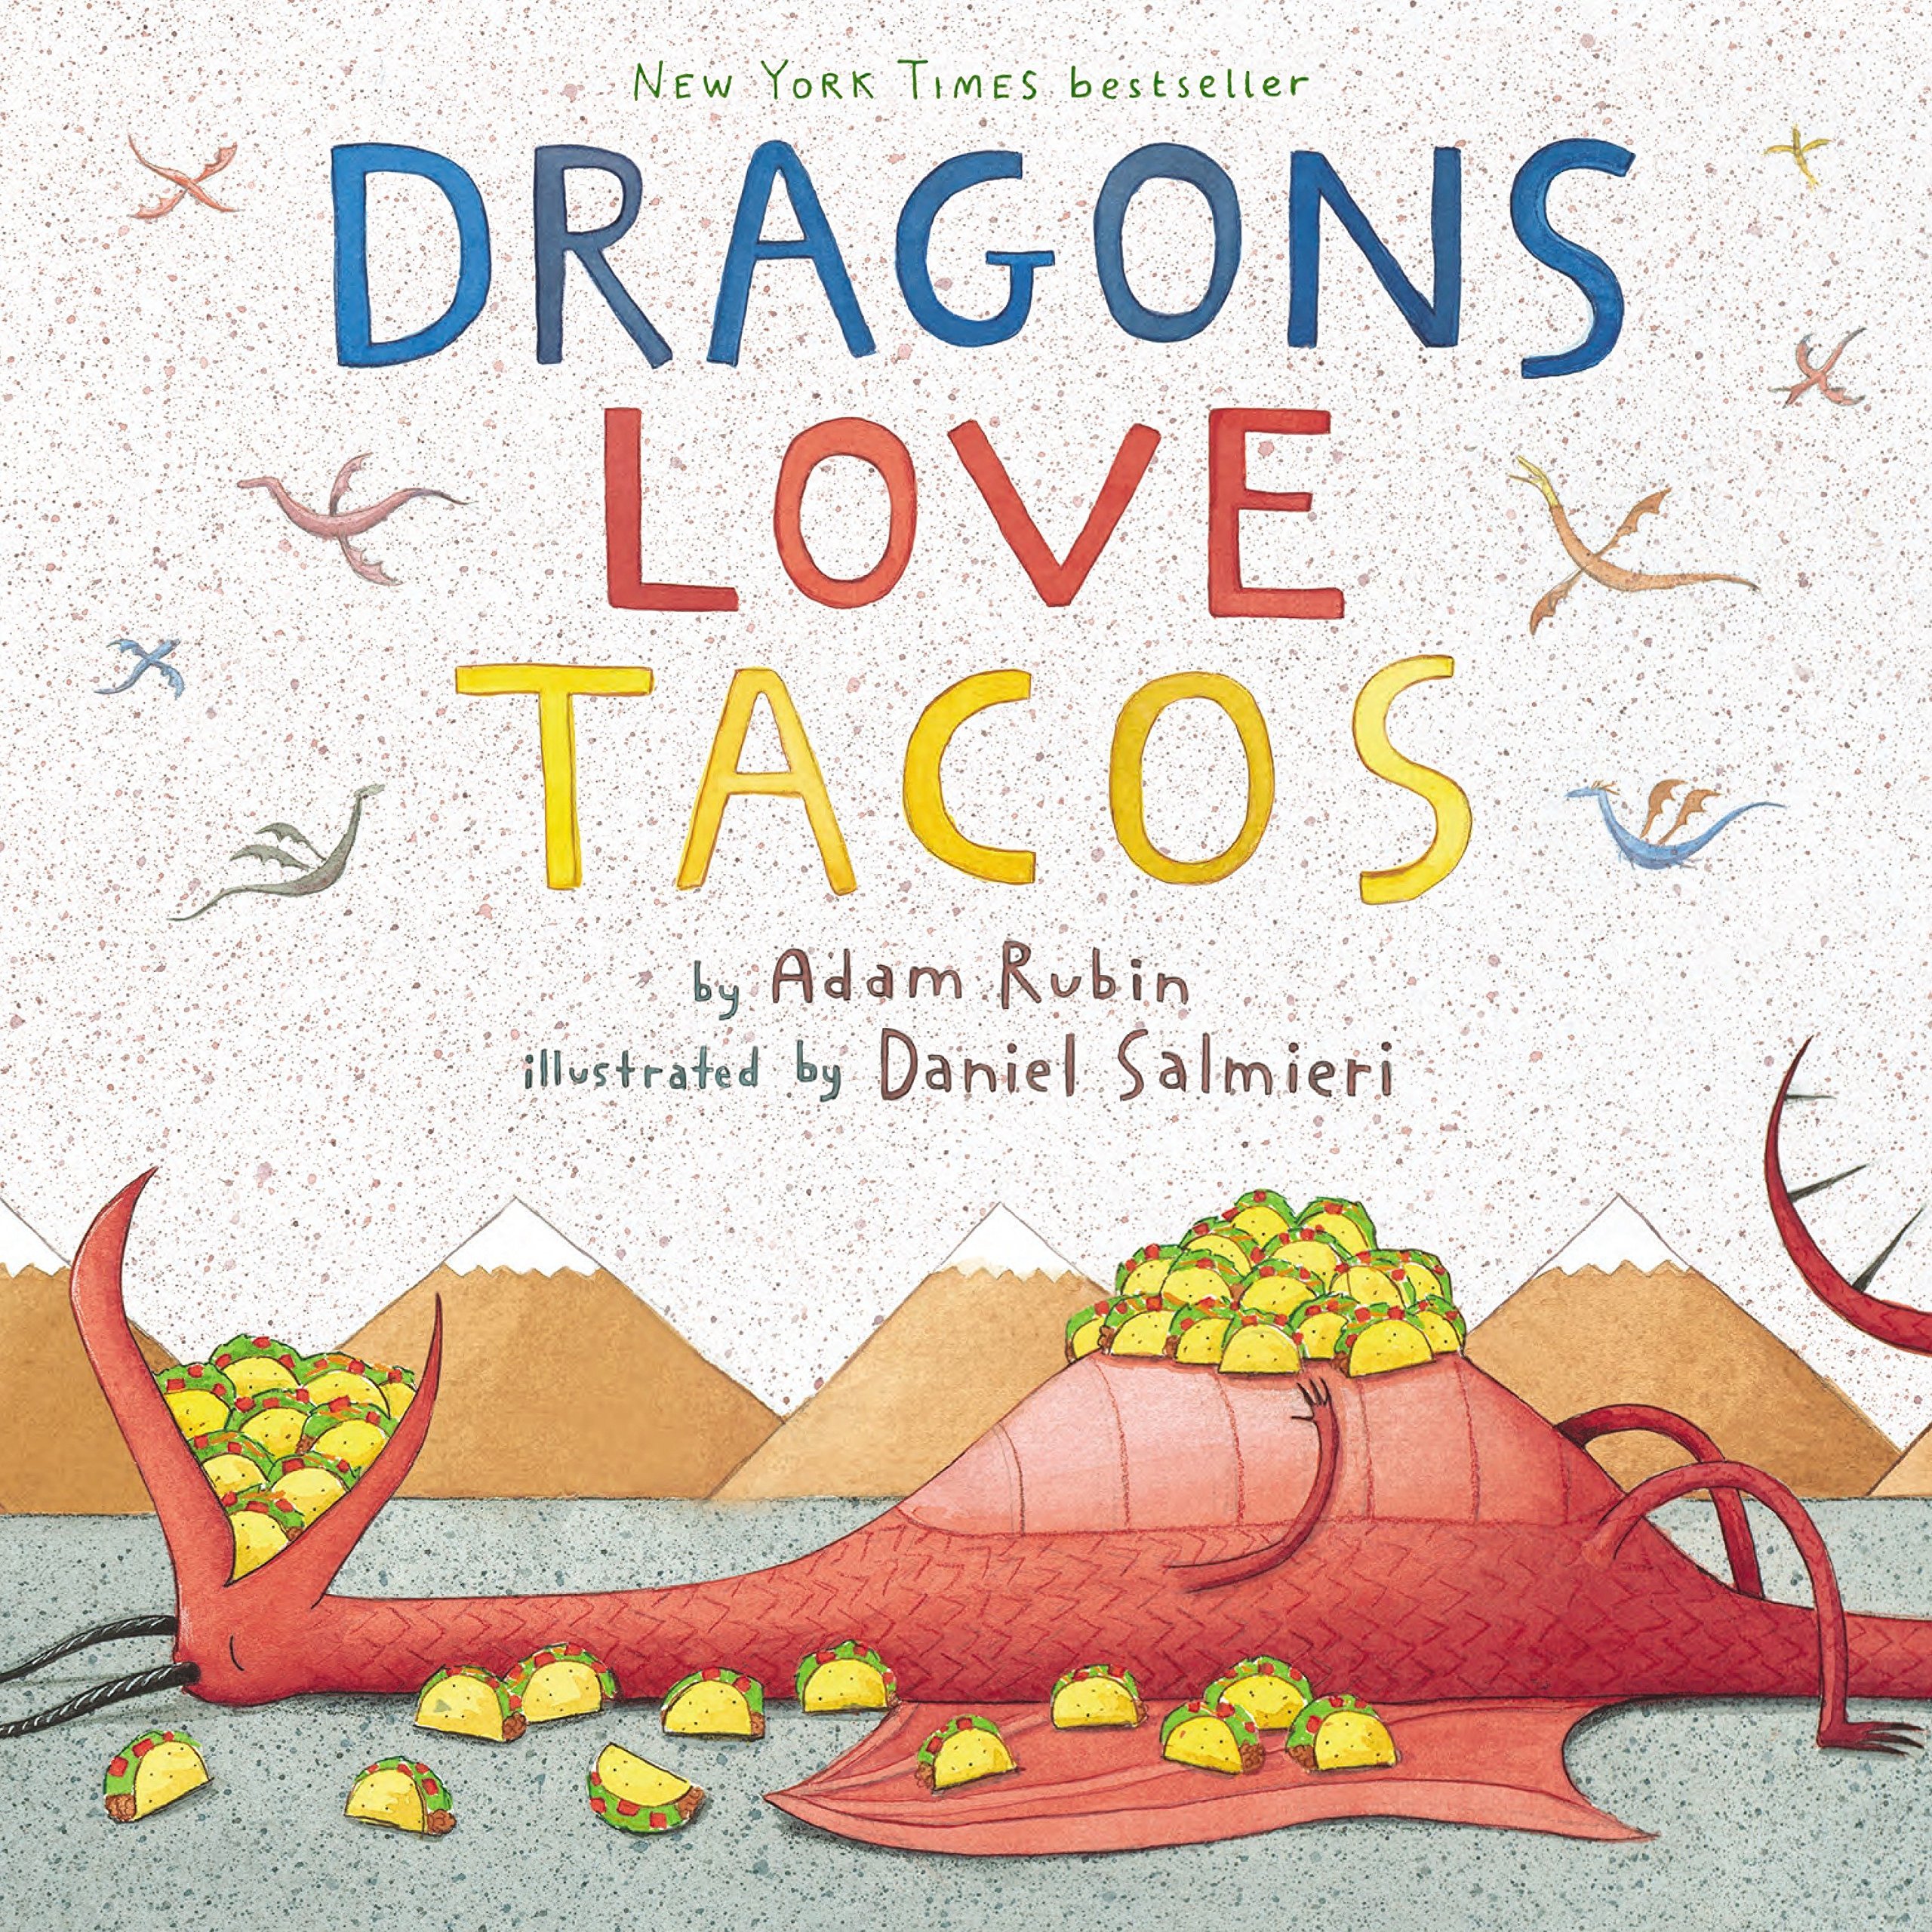 "Dragons Love Tacos" by Adam Rubin